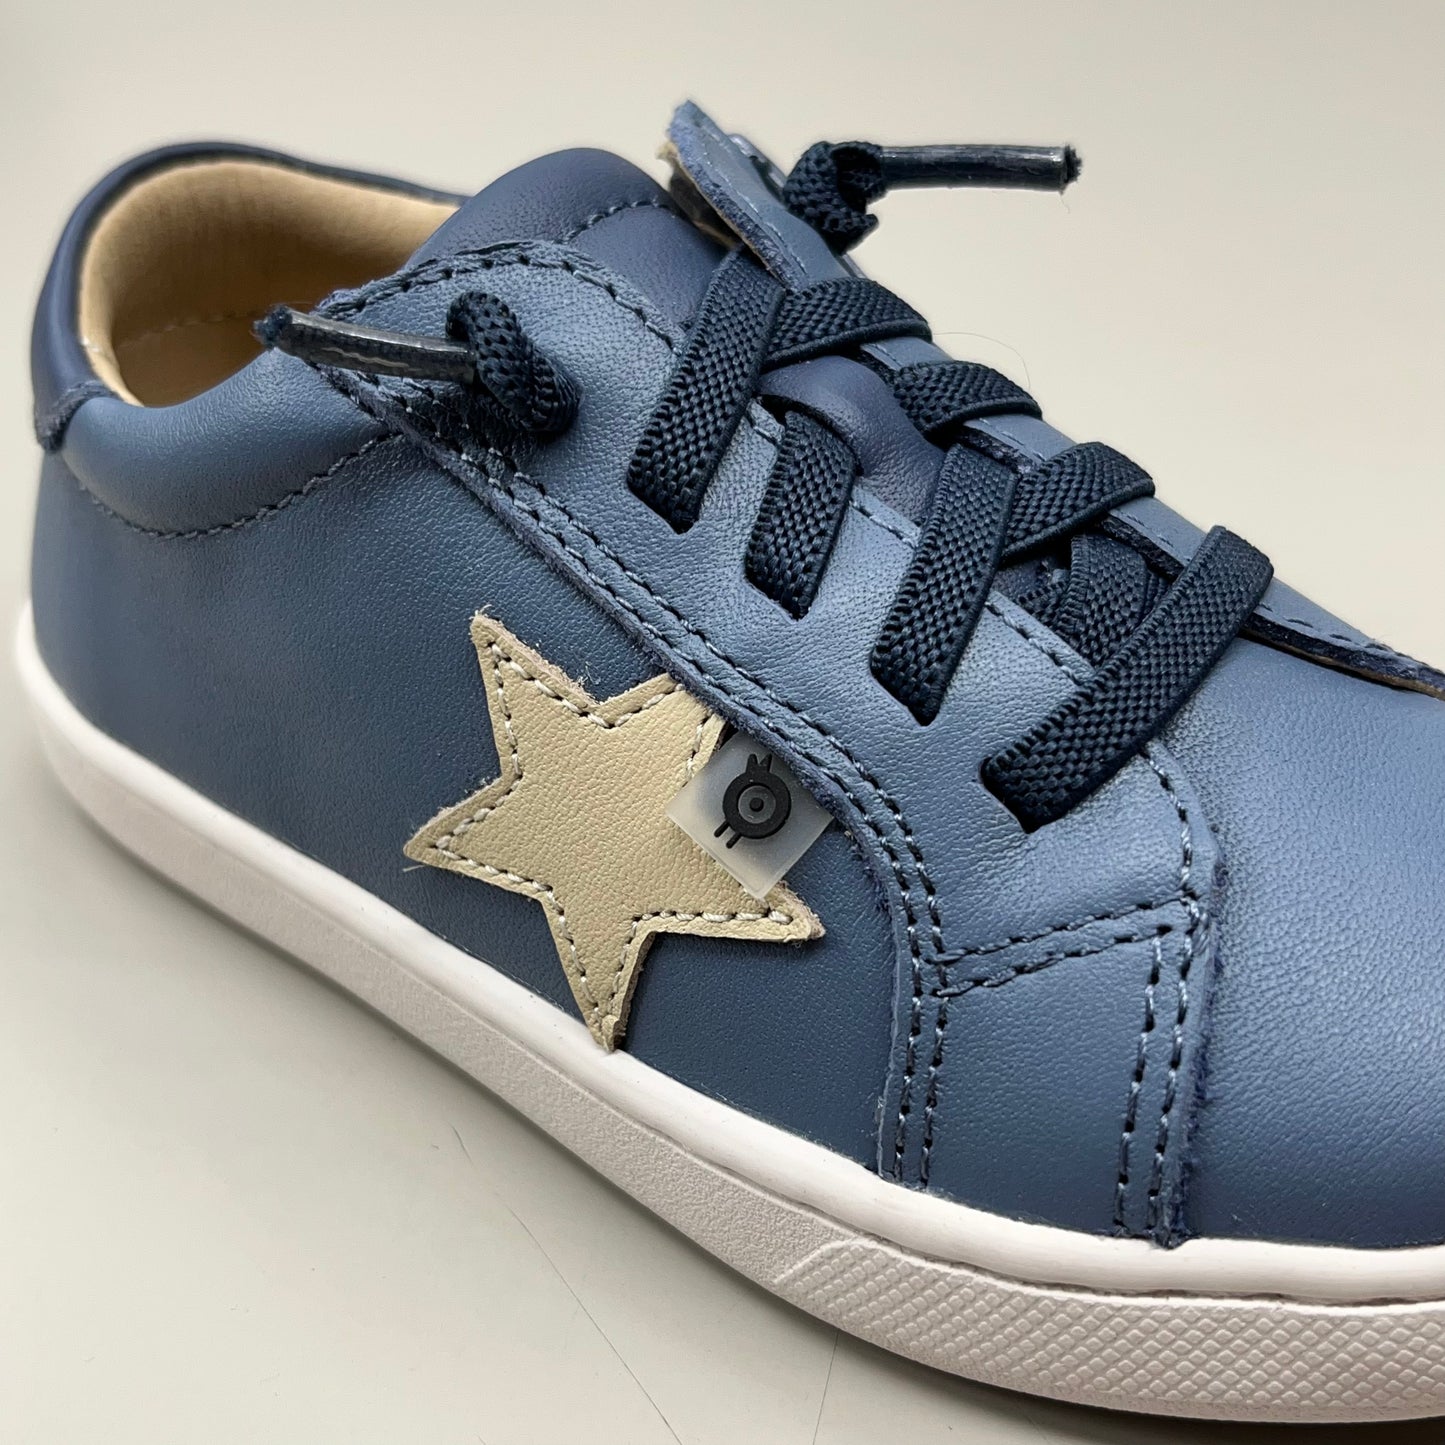 OLD SOLES Comet Runner Sneakers Kid’s Sz 26 US 9.5 Indigo/Petrol/Cream #6149